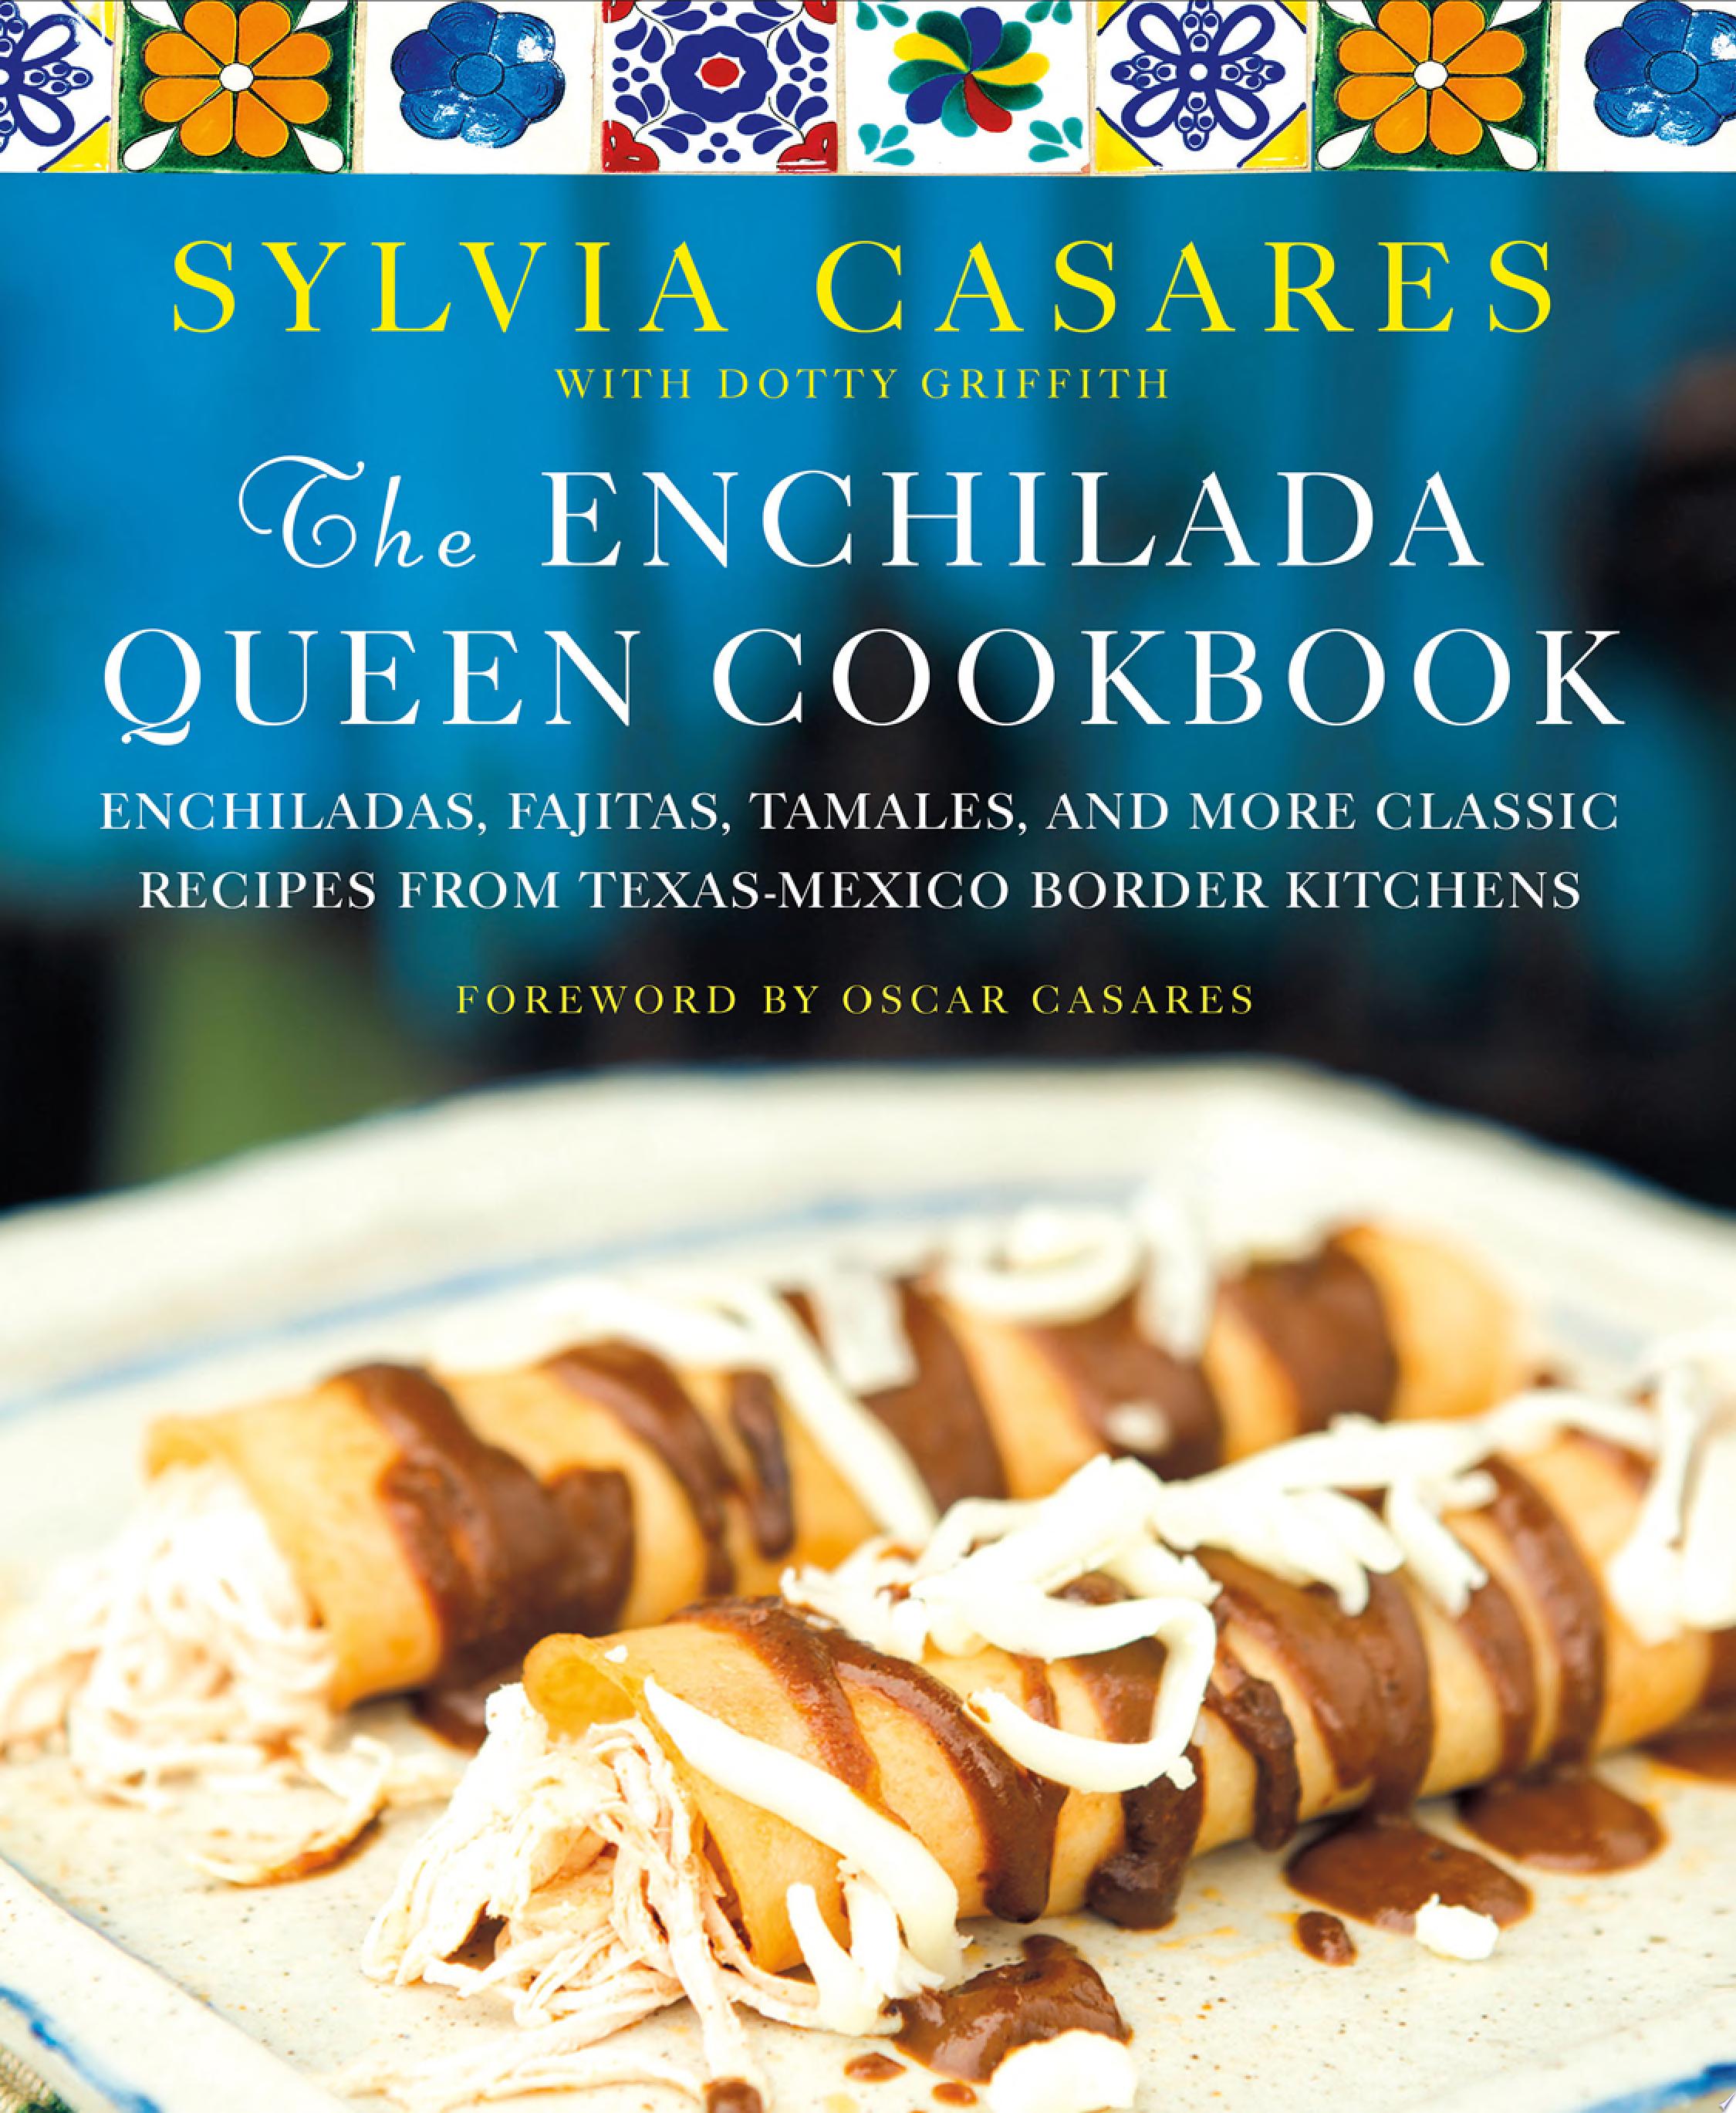 Image for "The Enchilada Queen Cookbook"